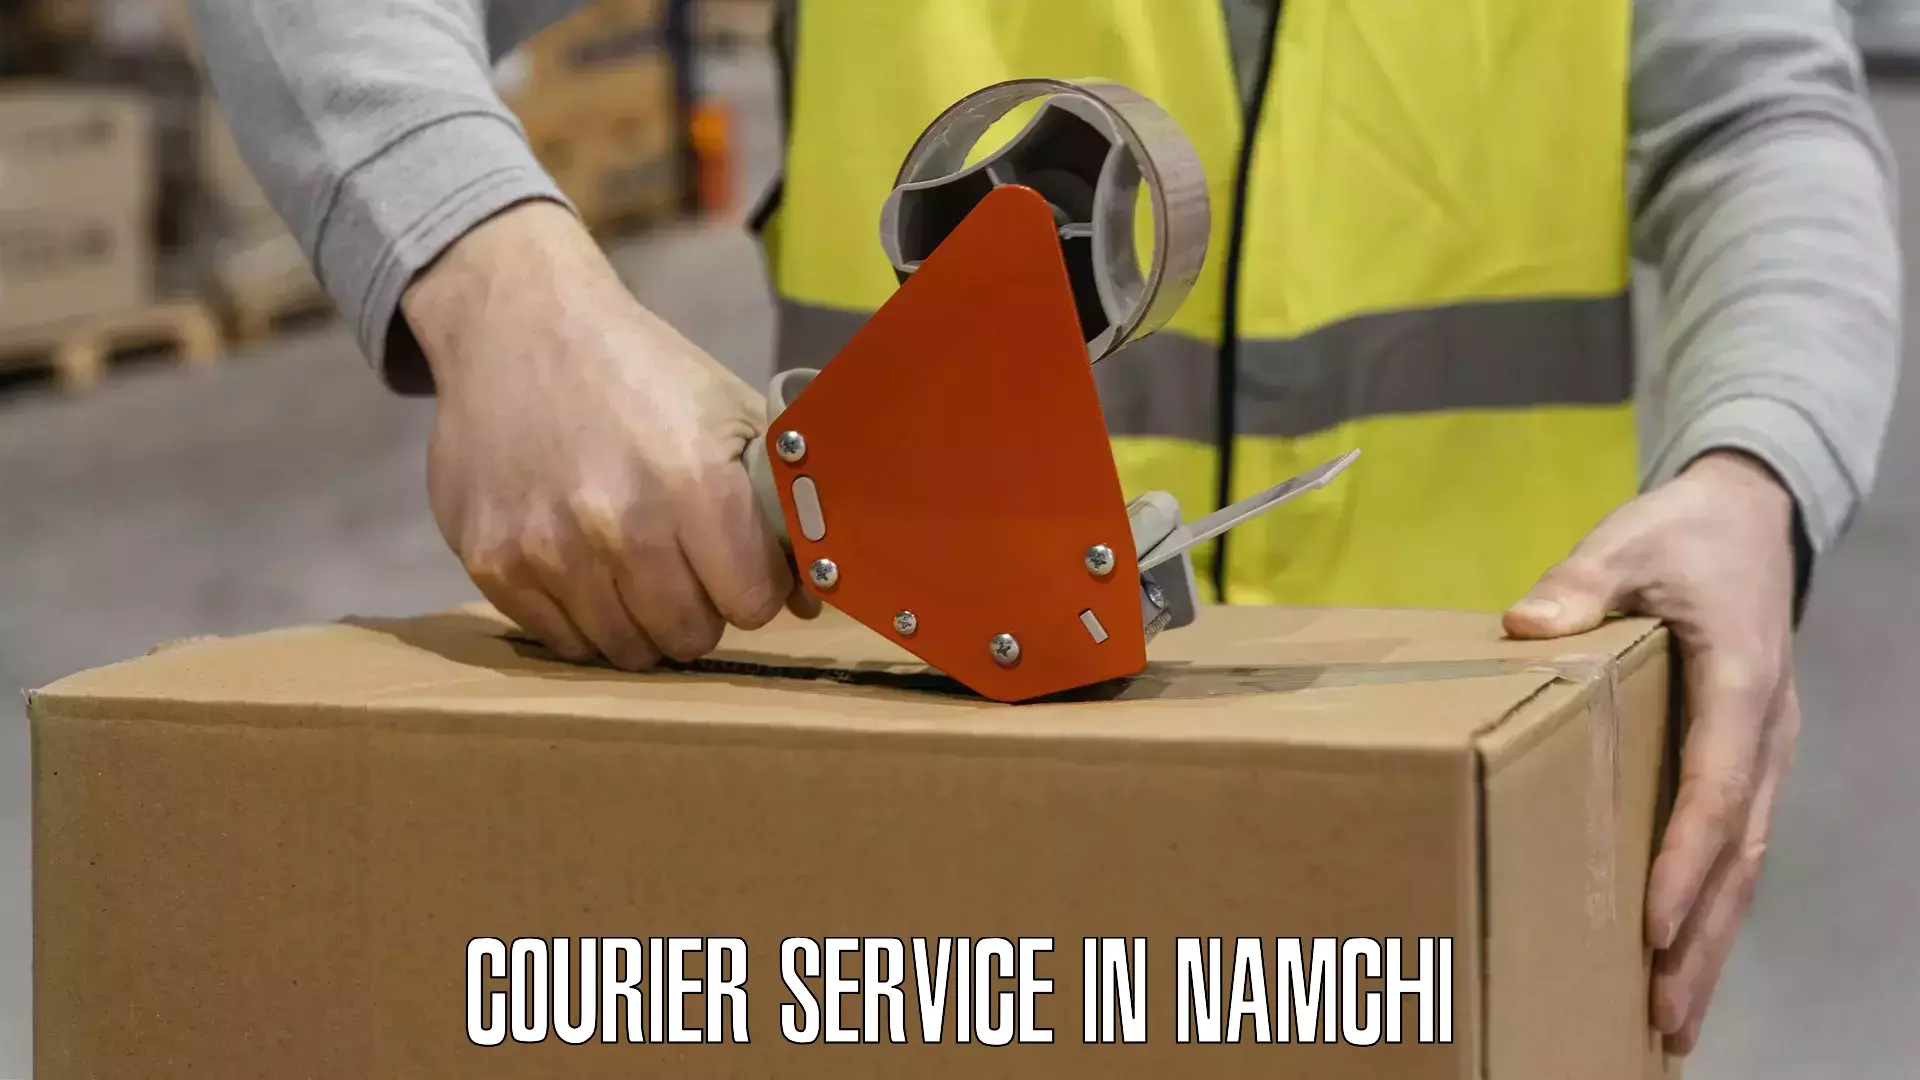 Express package handling in Namchi